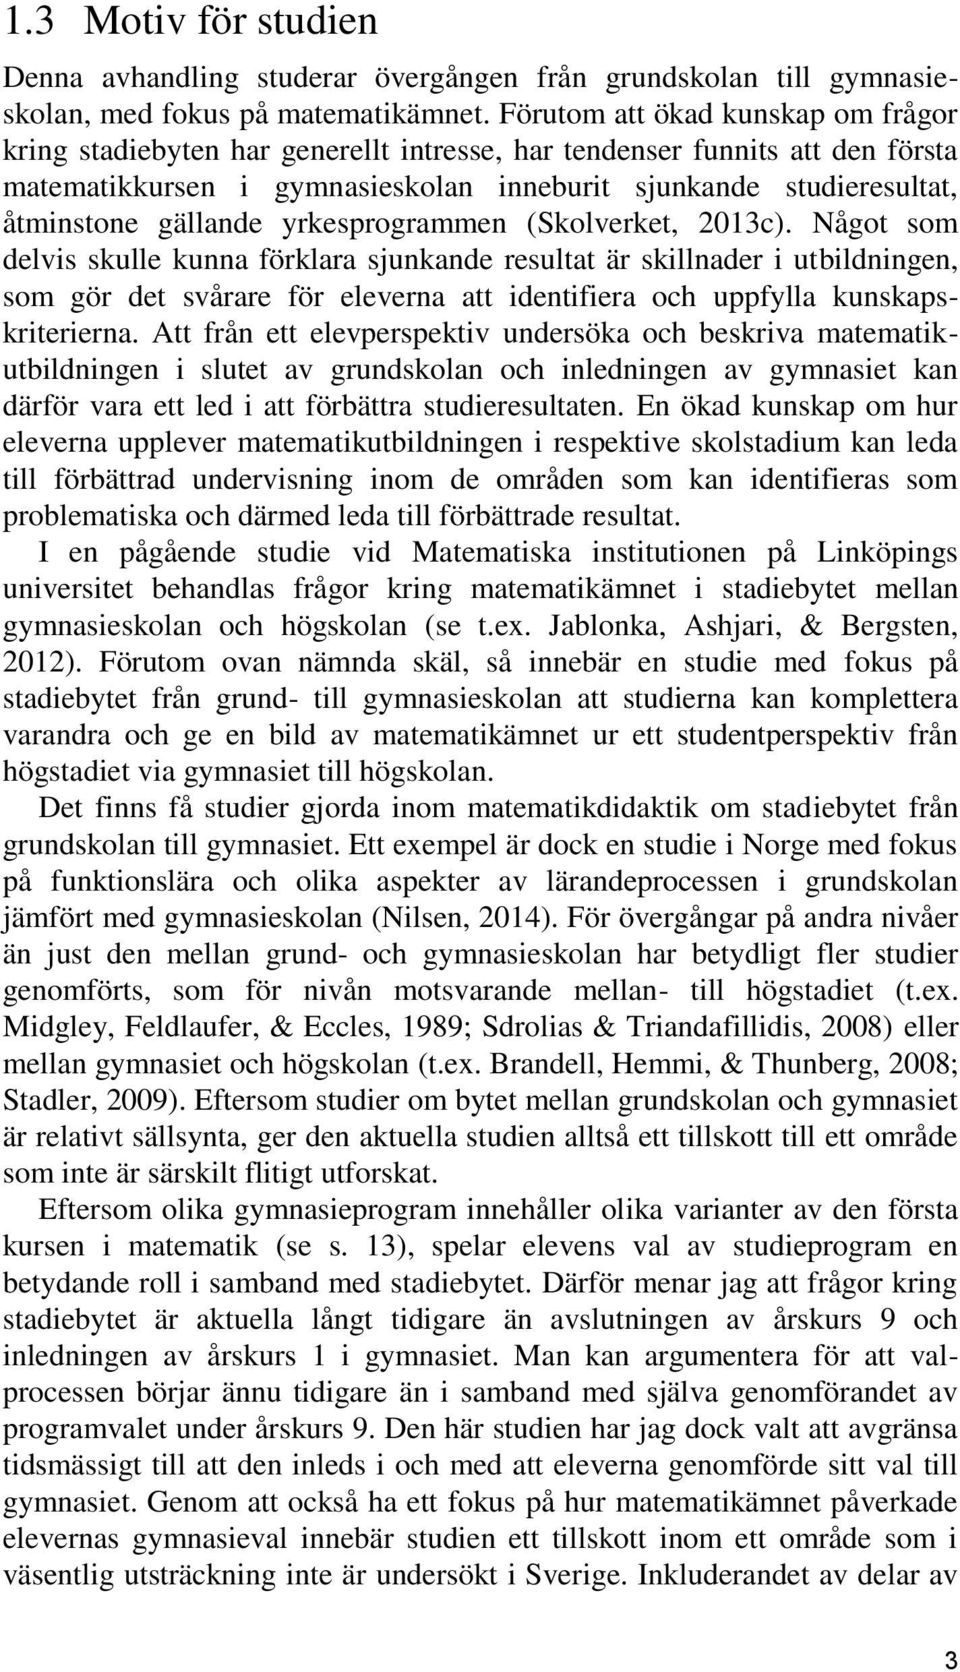 gällande yrkesprogrammen (Skolverket, 2013c).